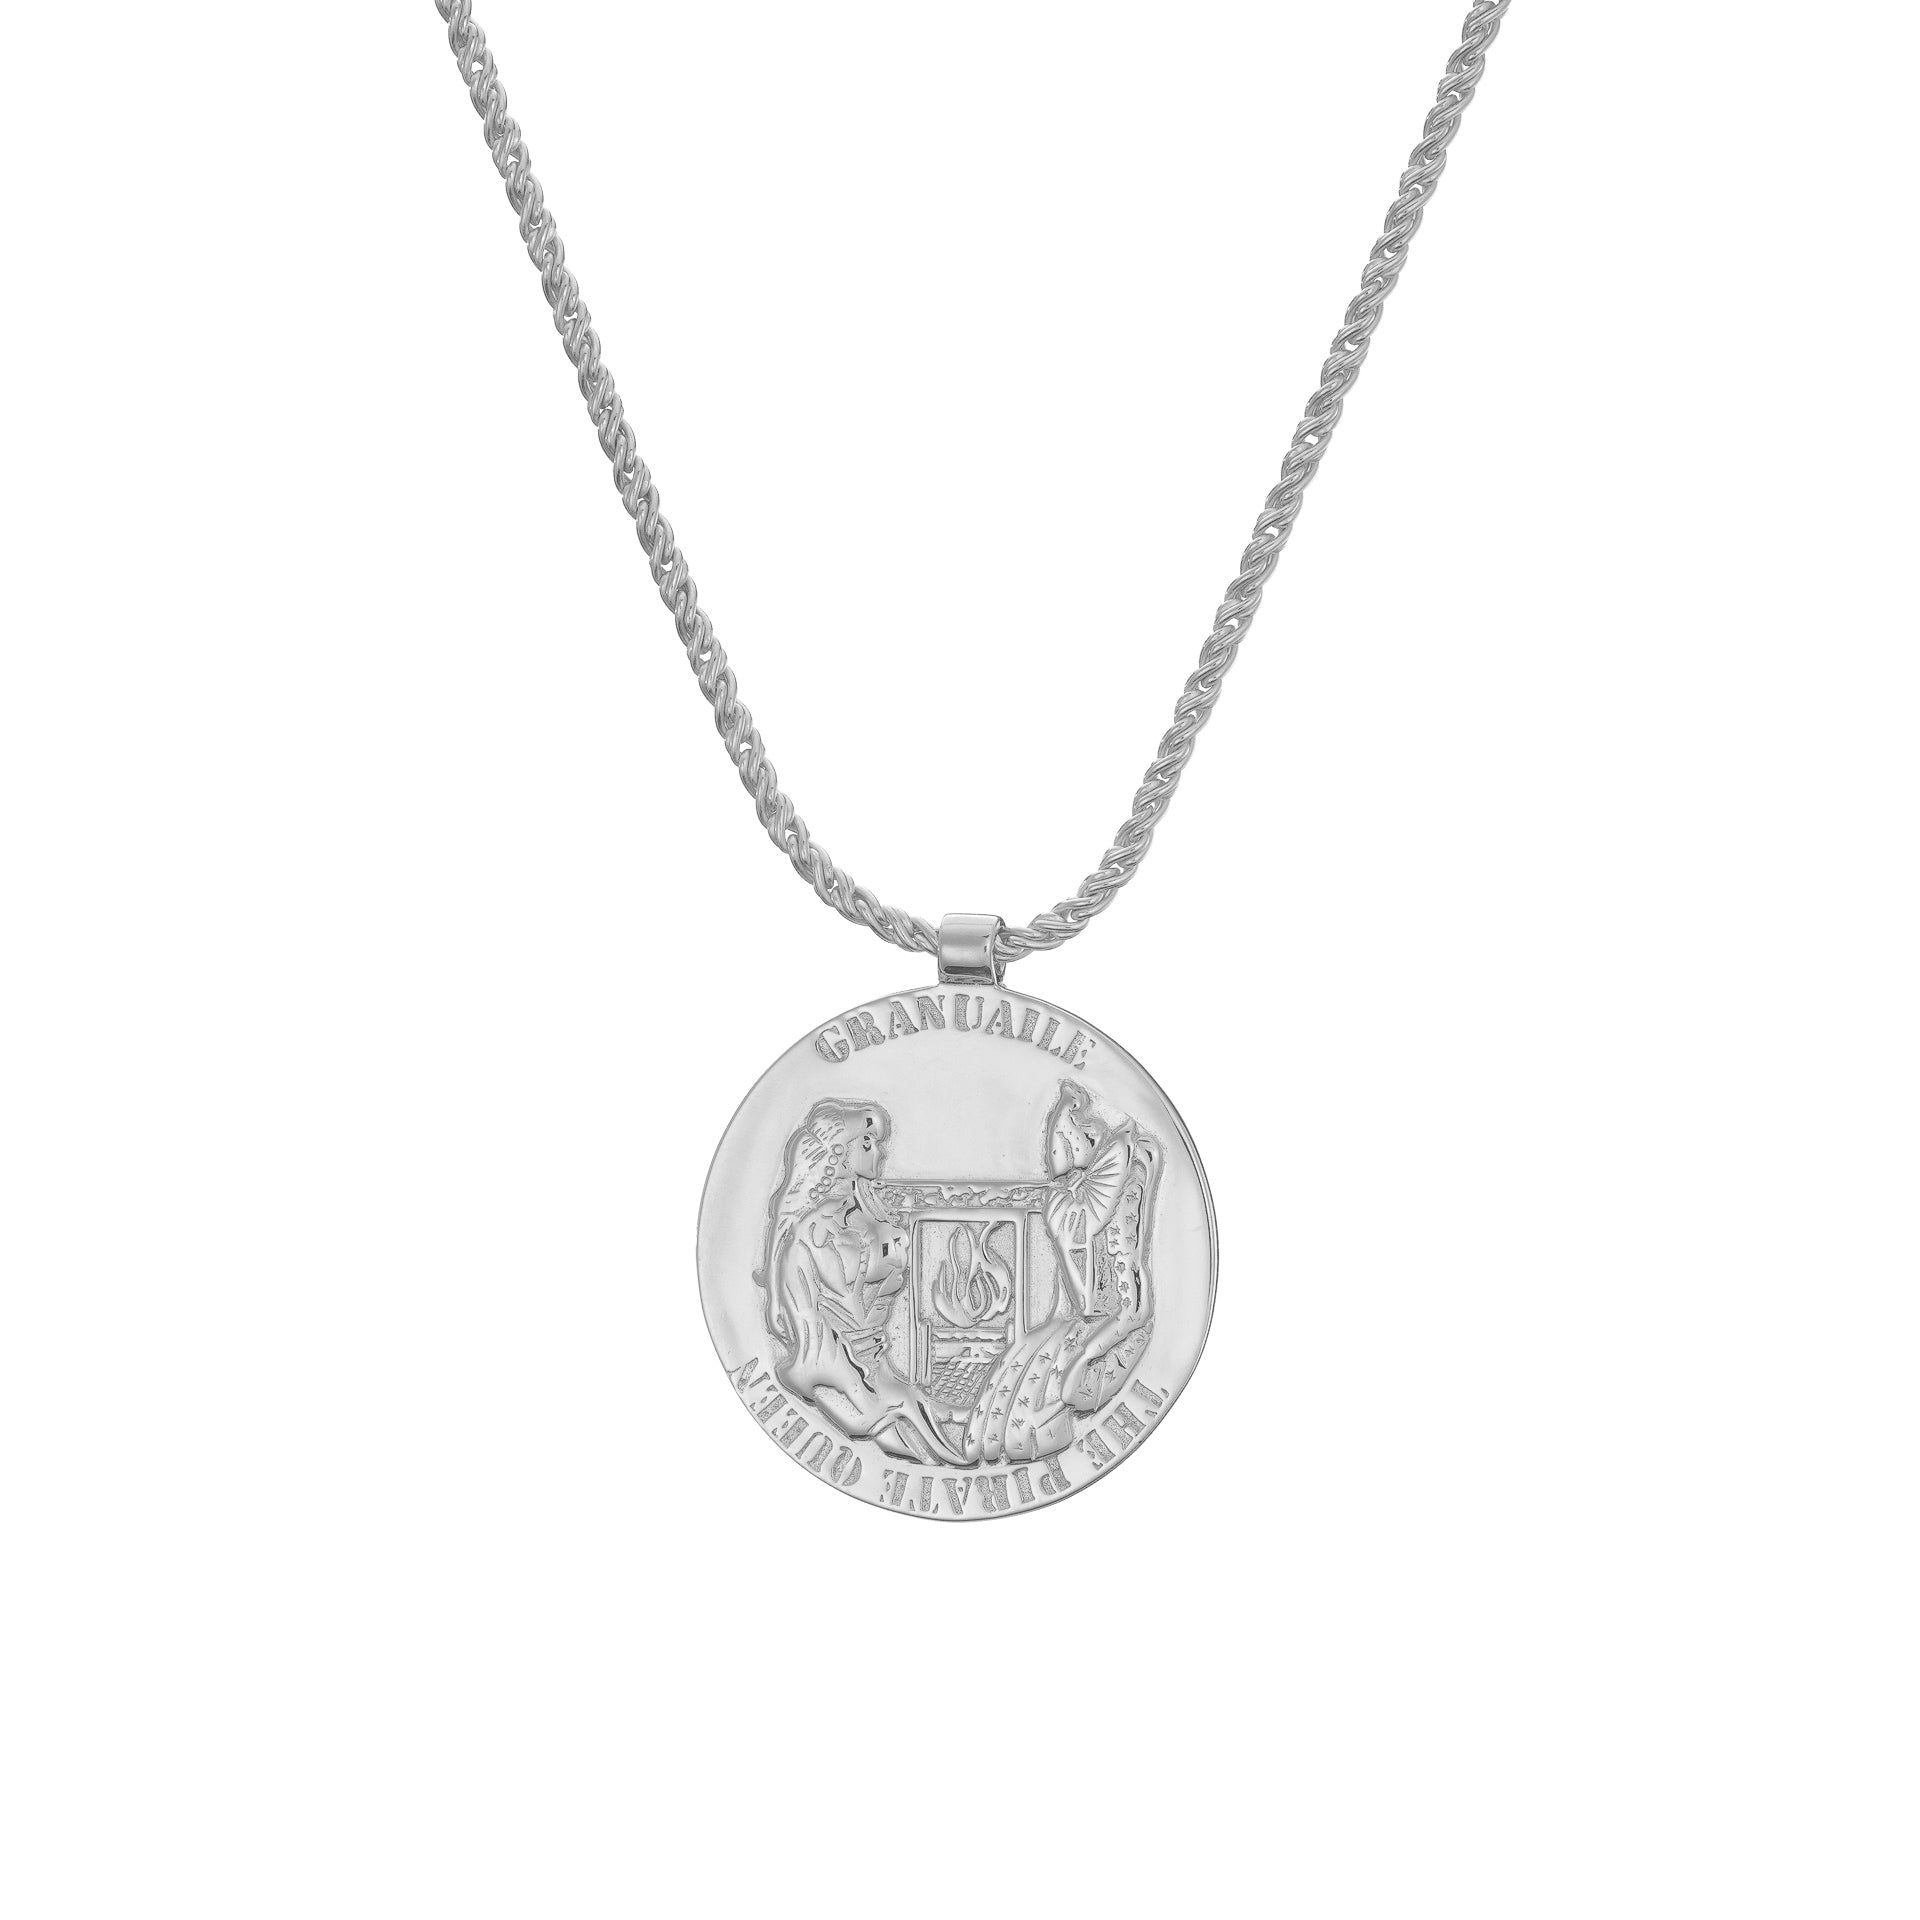 GRACE O'MALLEY Medallion Necklace